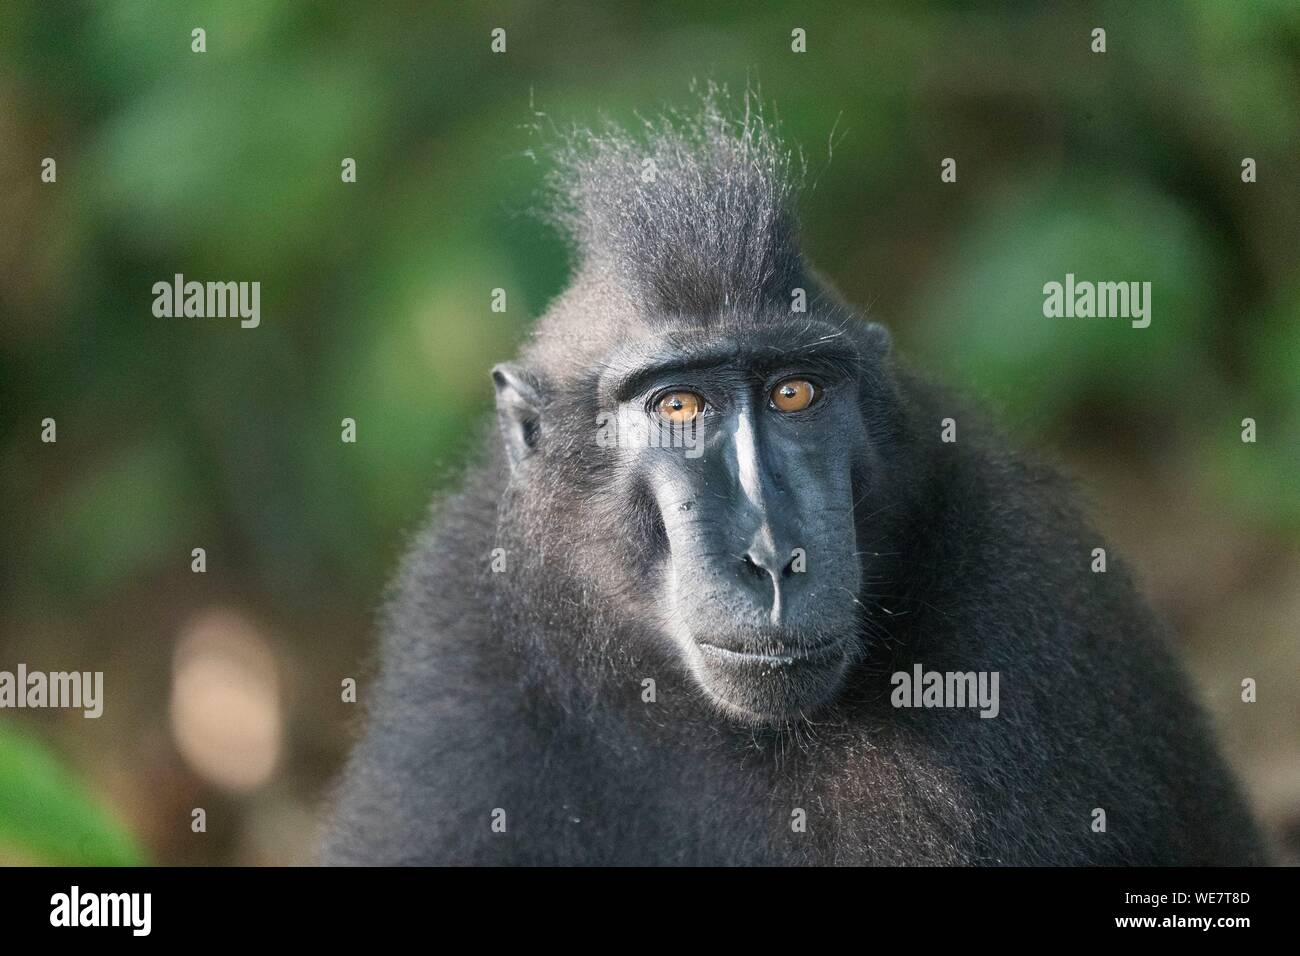 Indonesia, Celebes, Sulawesi, Tangkoko National Park, Celebes crested macaque or crested black macaque, Sulawesi crested macaque, or the black ape (Macaca nigra) Stock Photo